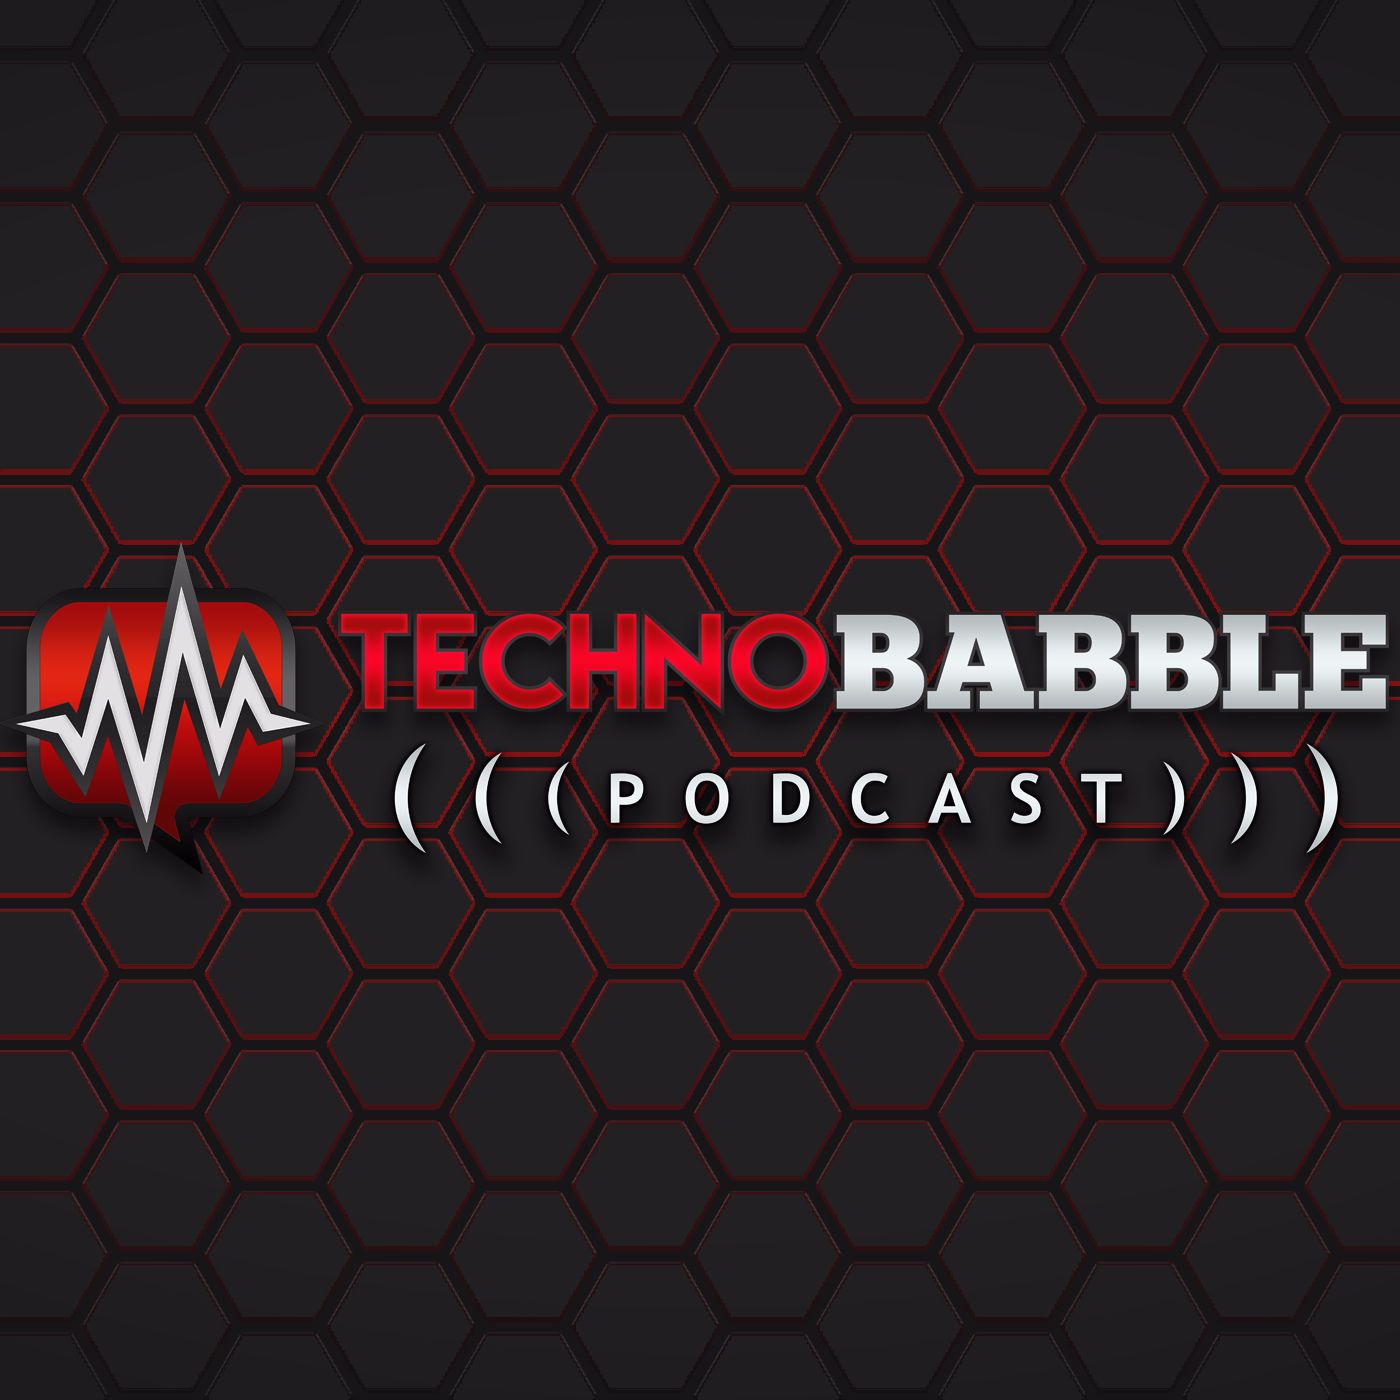 The Technobabble Podcast